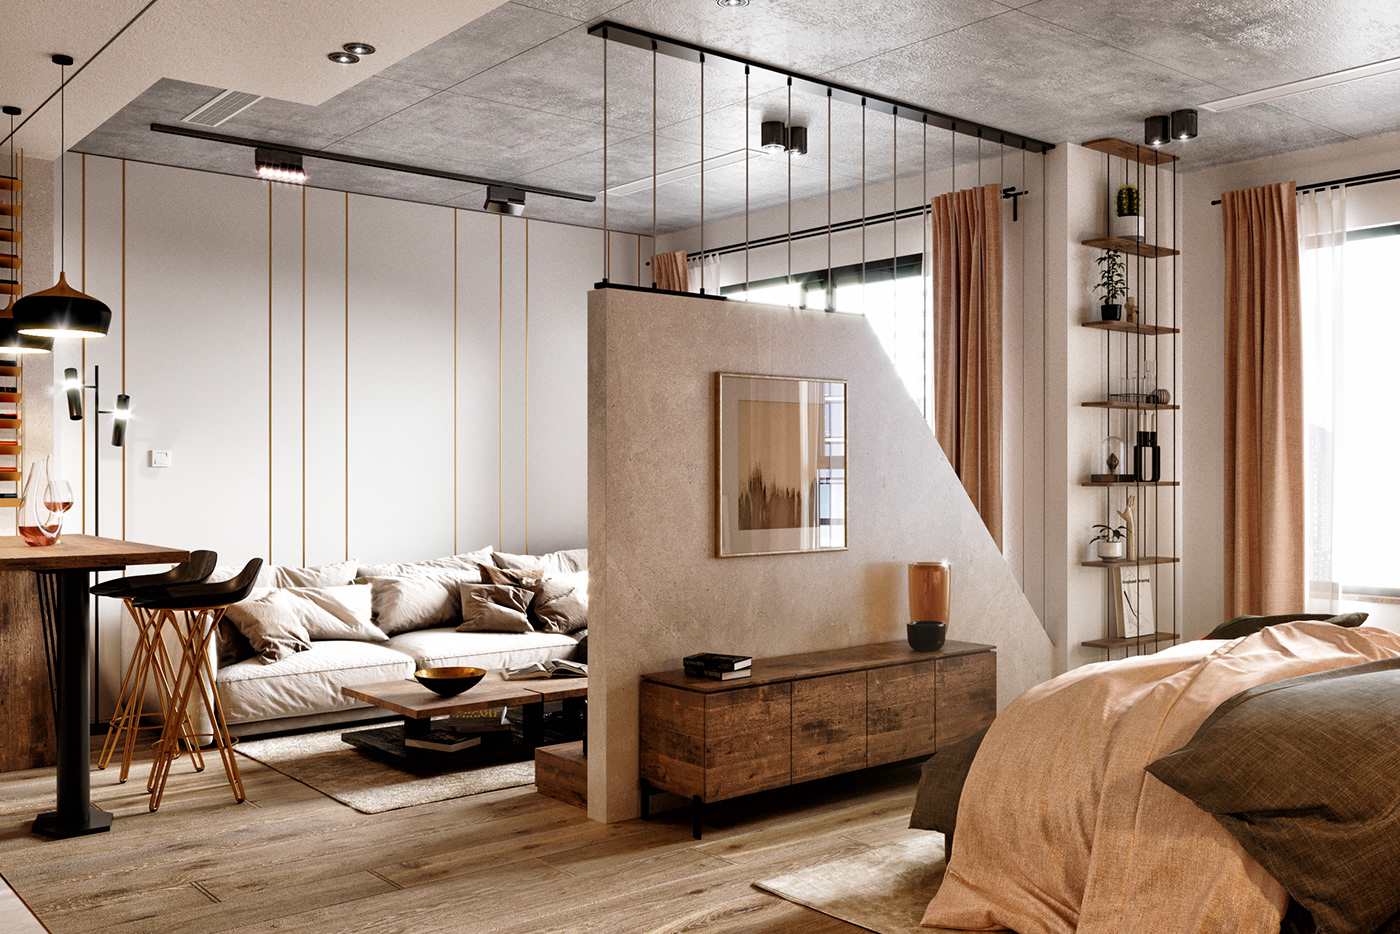 3ds max architecture art corona renderer design furniture house Interior photoshop